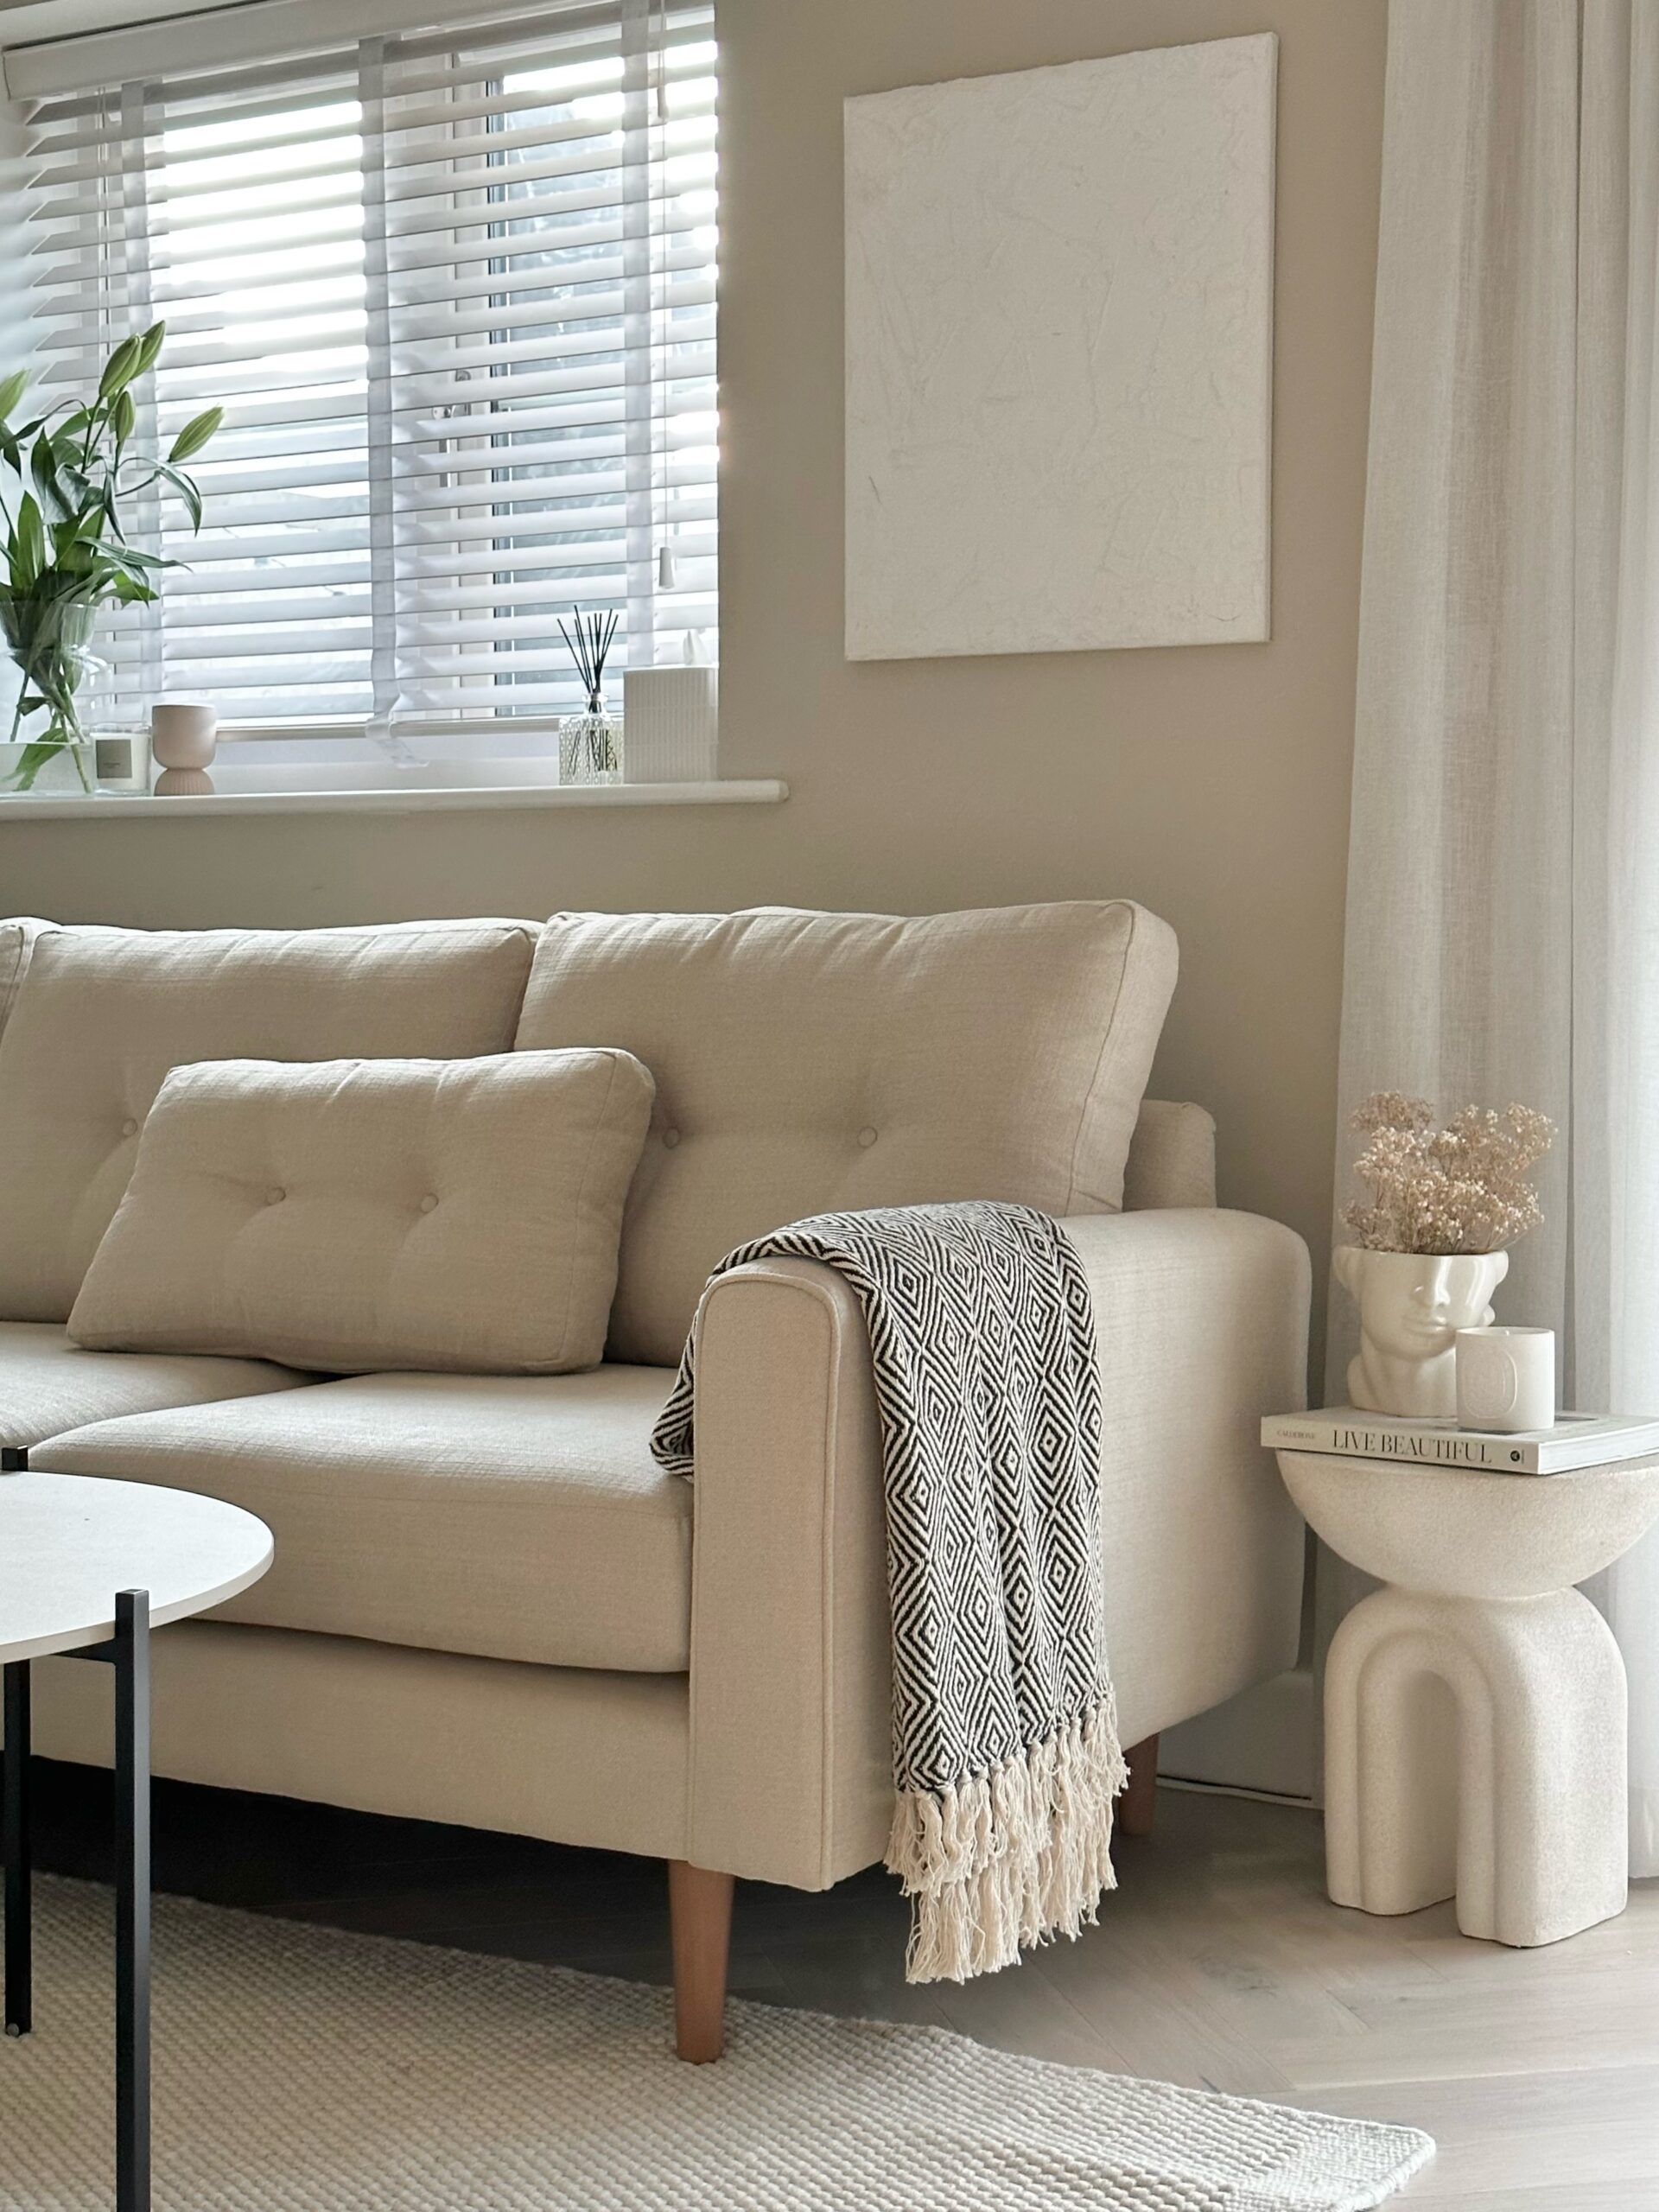 warm neutral living room ideas | the oak furnitureland blog